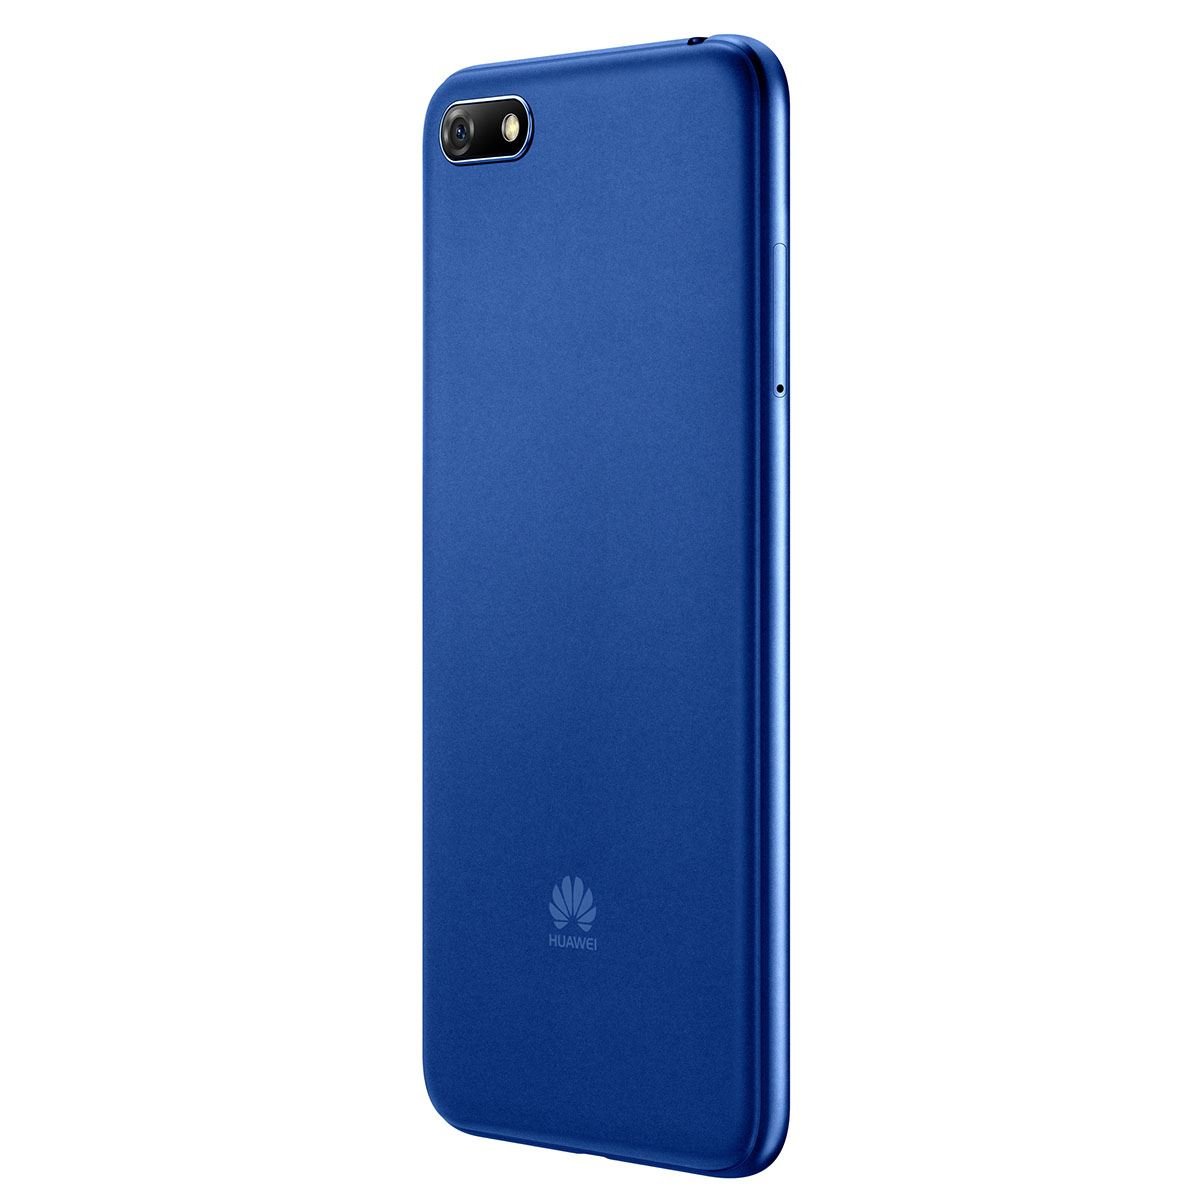 Celular Huawei Y5 2018 Color Azul R9 (Telcel)